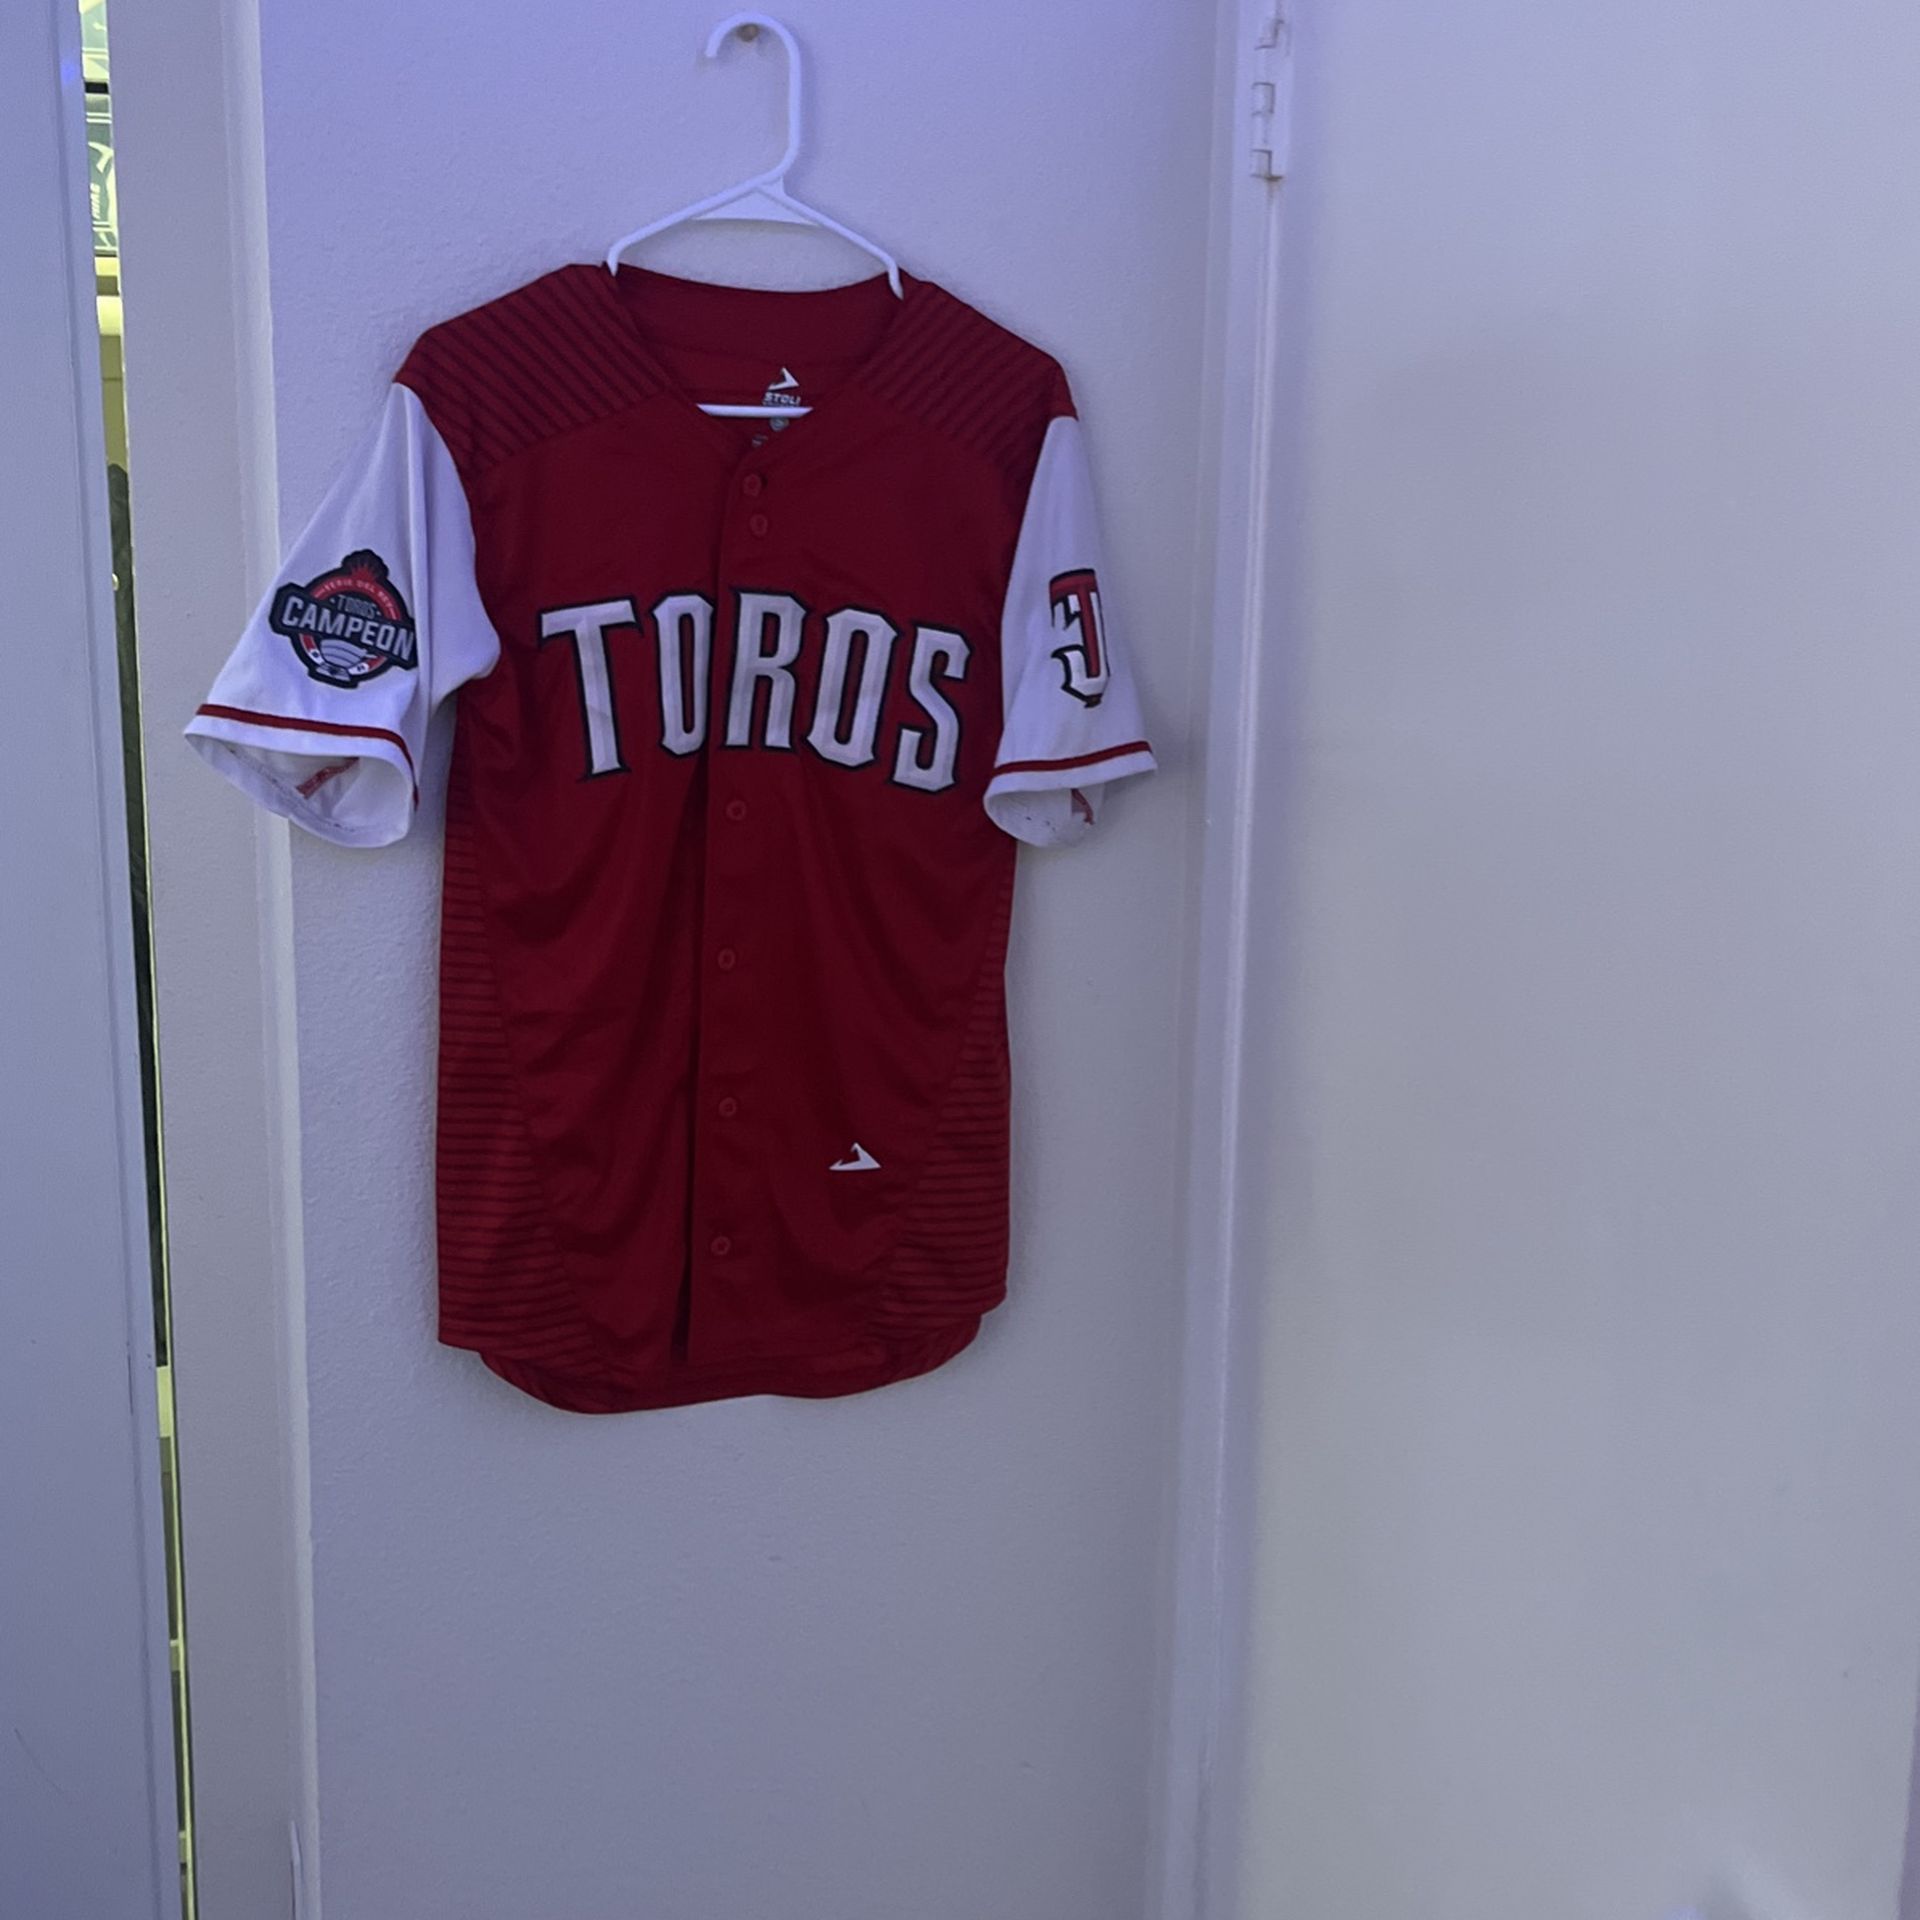 Tijuana toros baseball Jersey